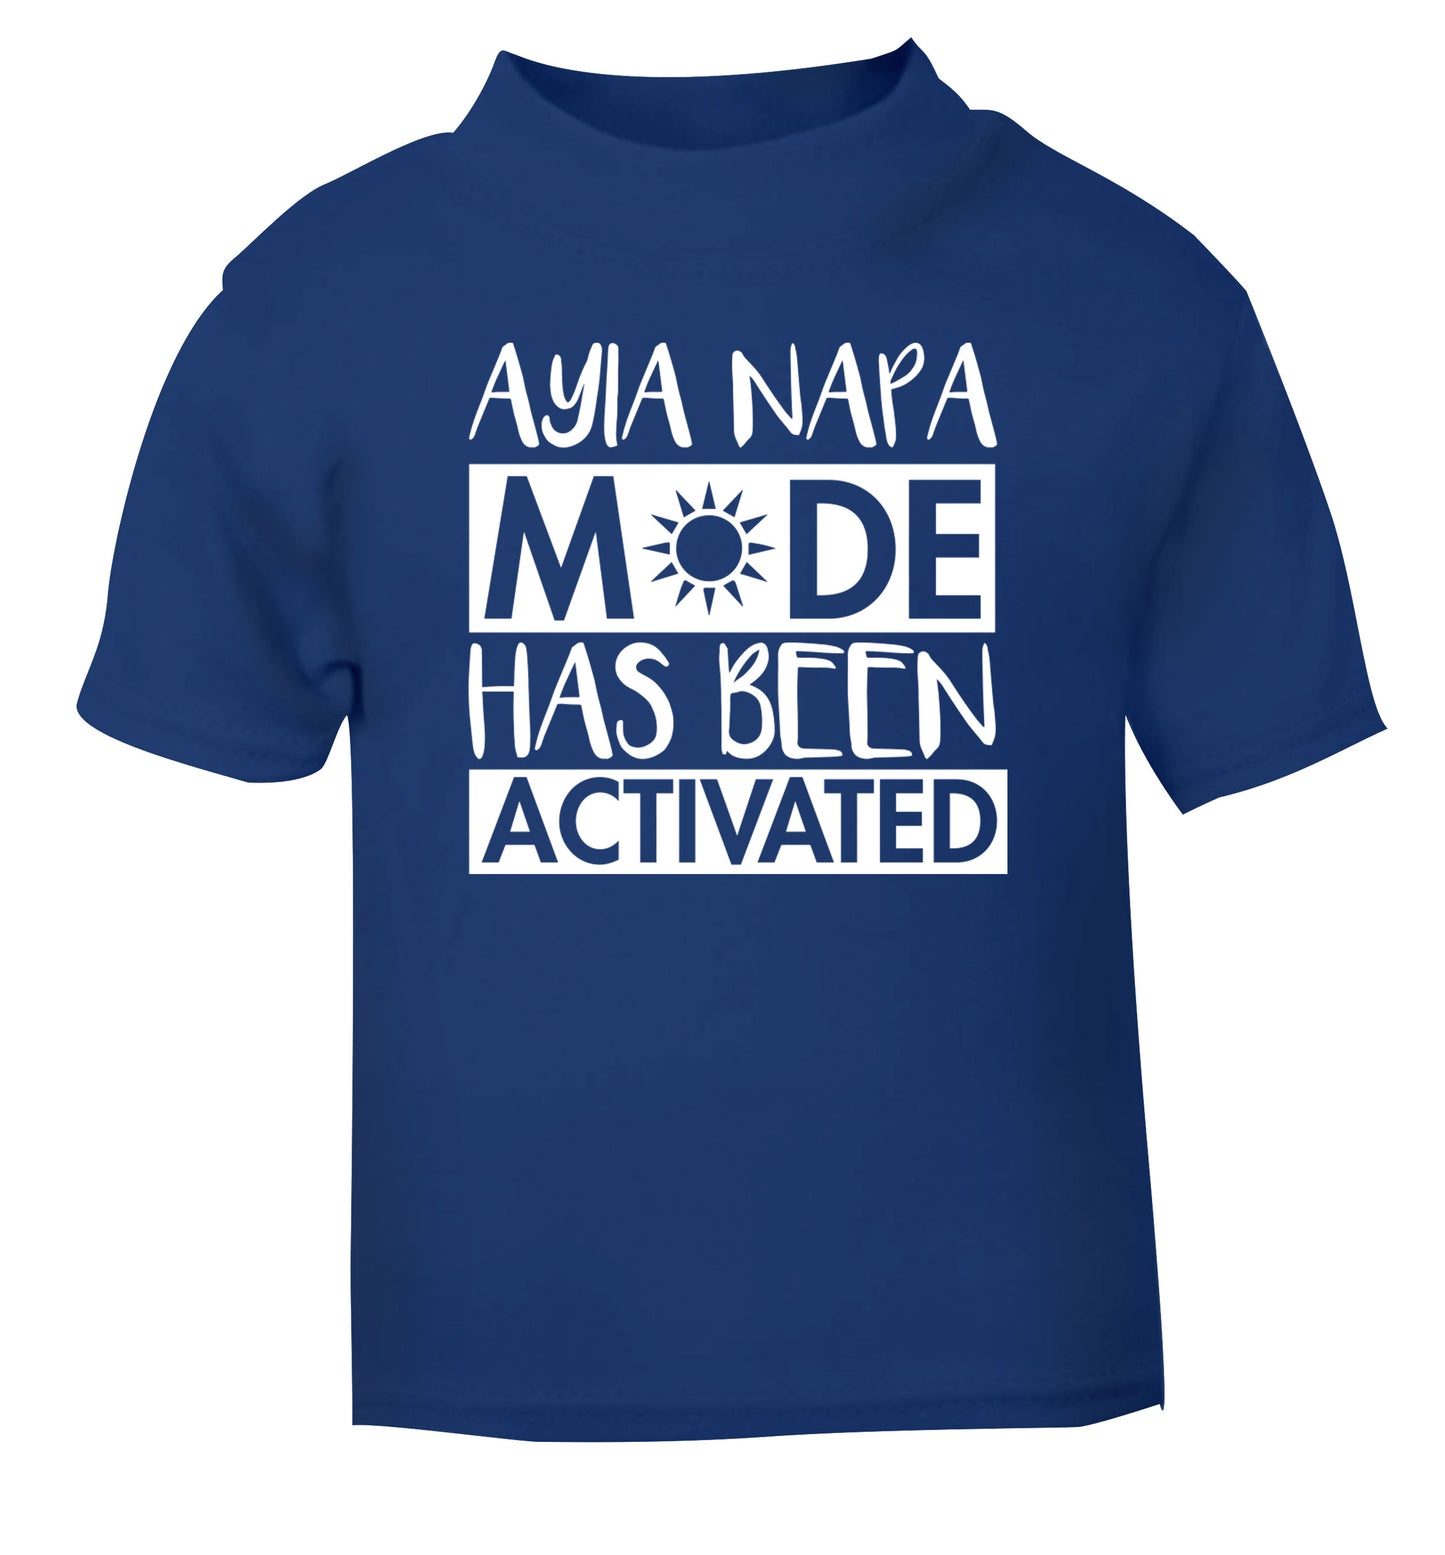 Aiya Napa mode has been activated blue Baby Toddler Tshirt 2 Years